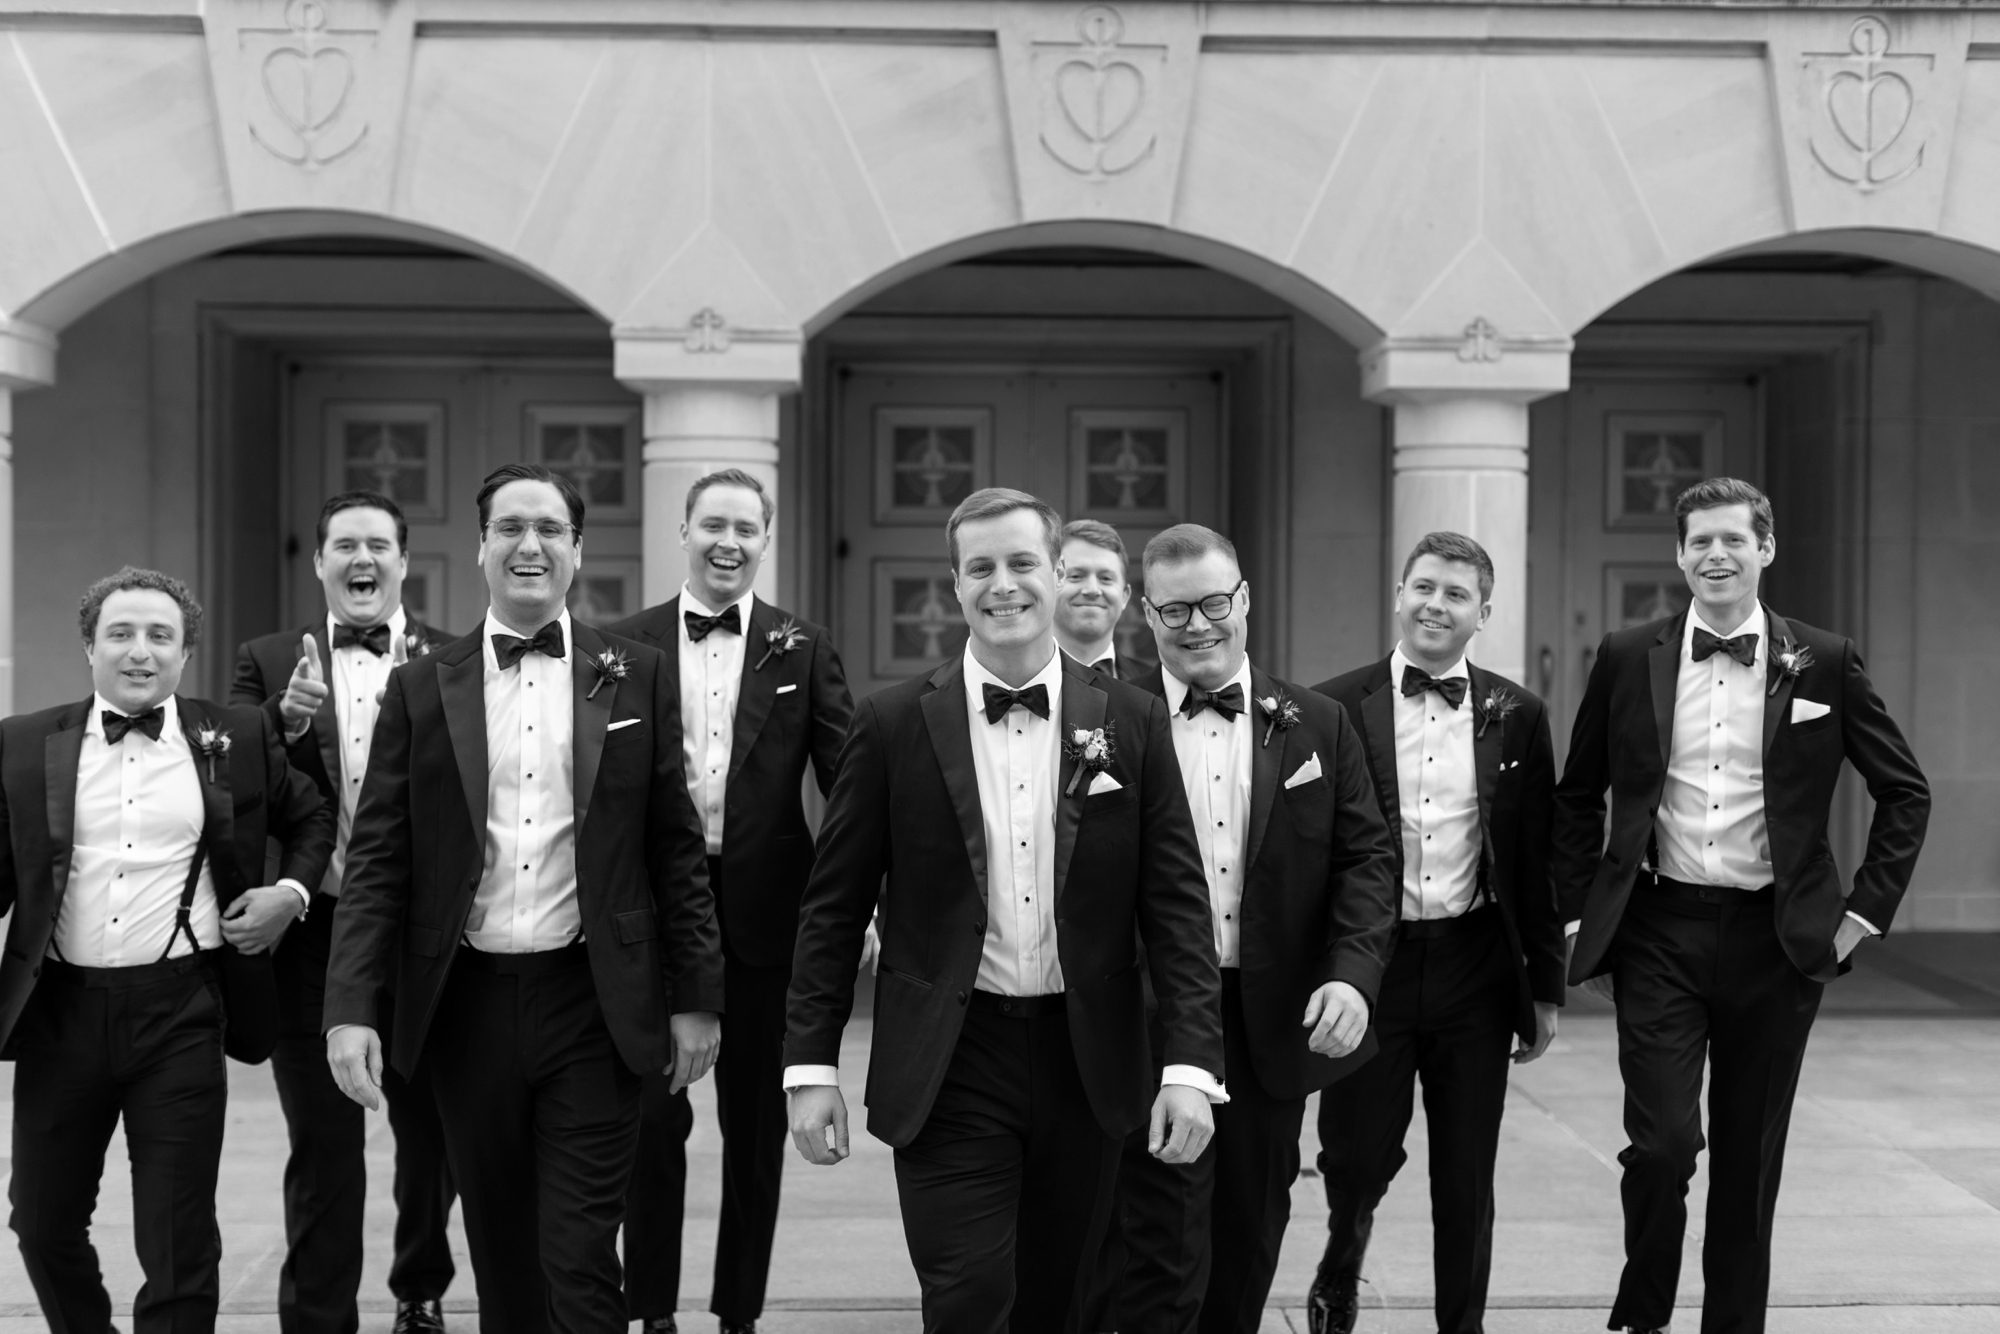 the groom and groomsmen wore classic black tuxedos